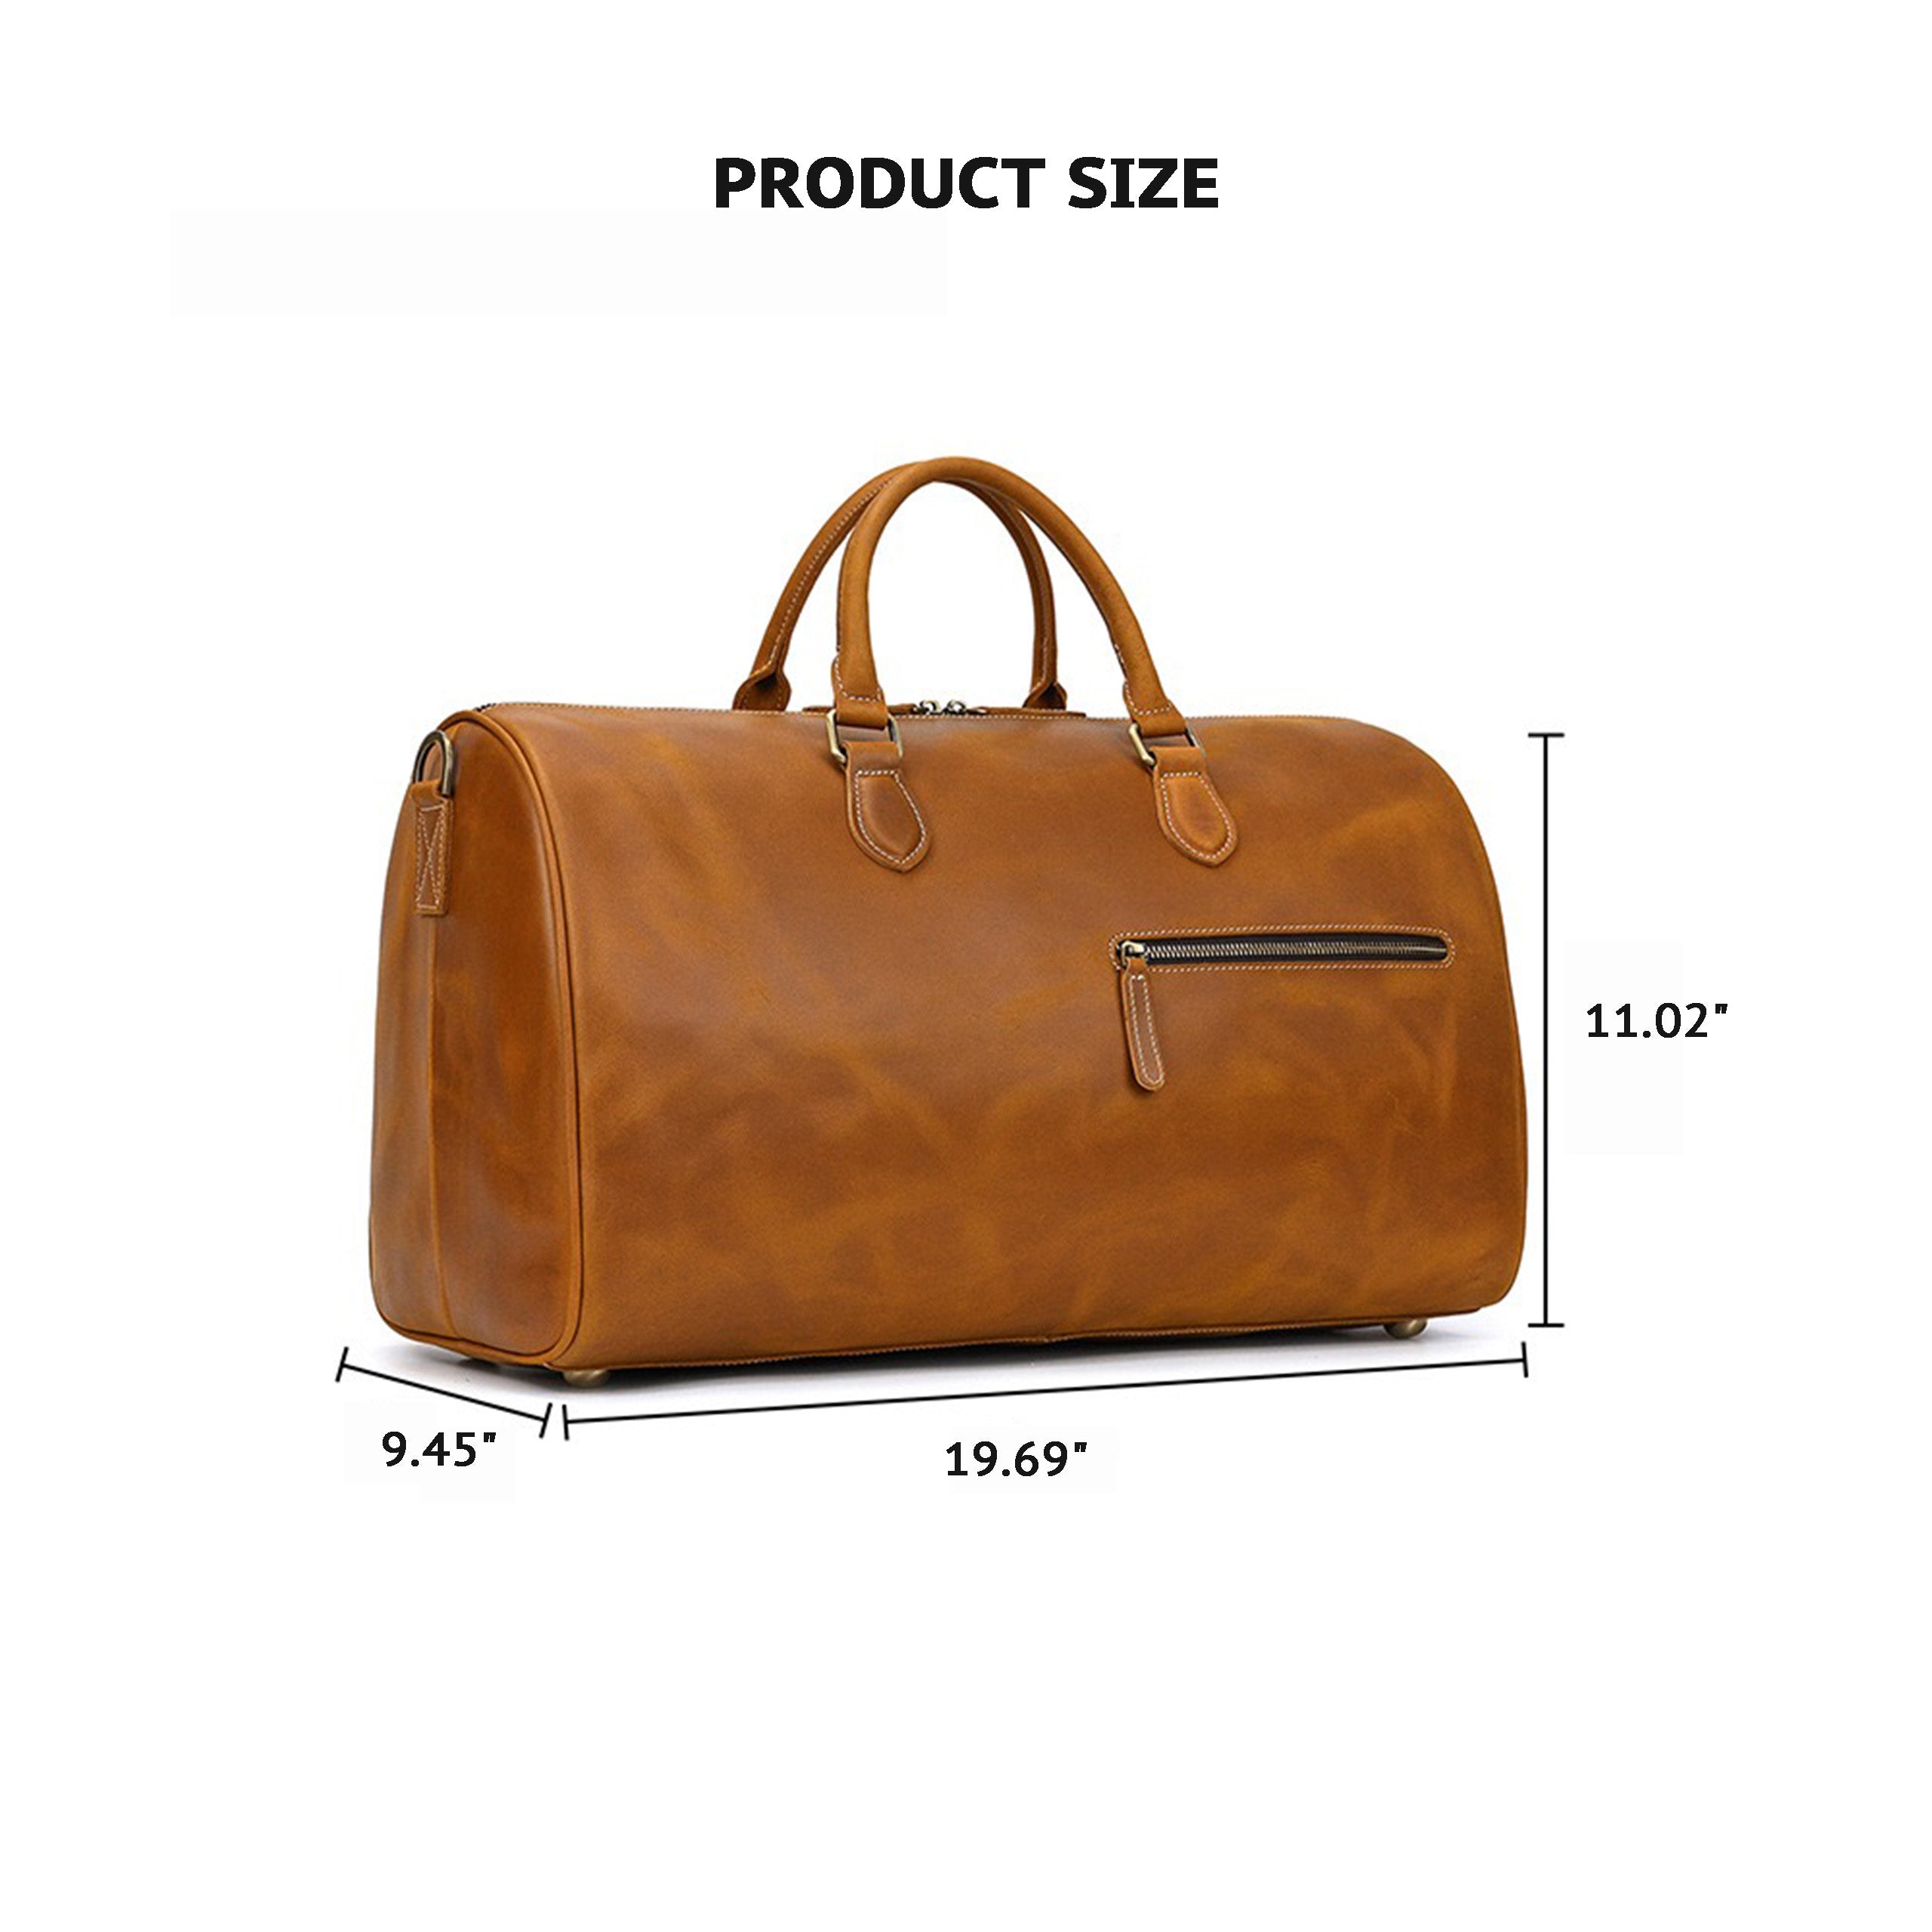 PRETTYMS Men's Genuine Leather Handbag Bag The Bento Bag Classic Carry-On Luggage Duffel Bag Travel Luggage Bag For Men